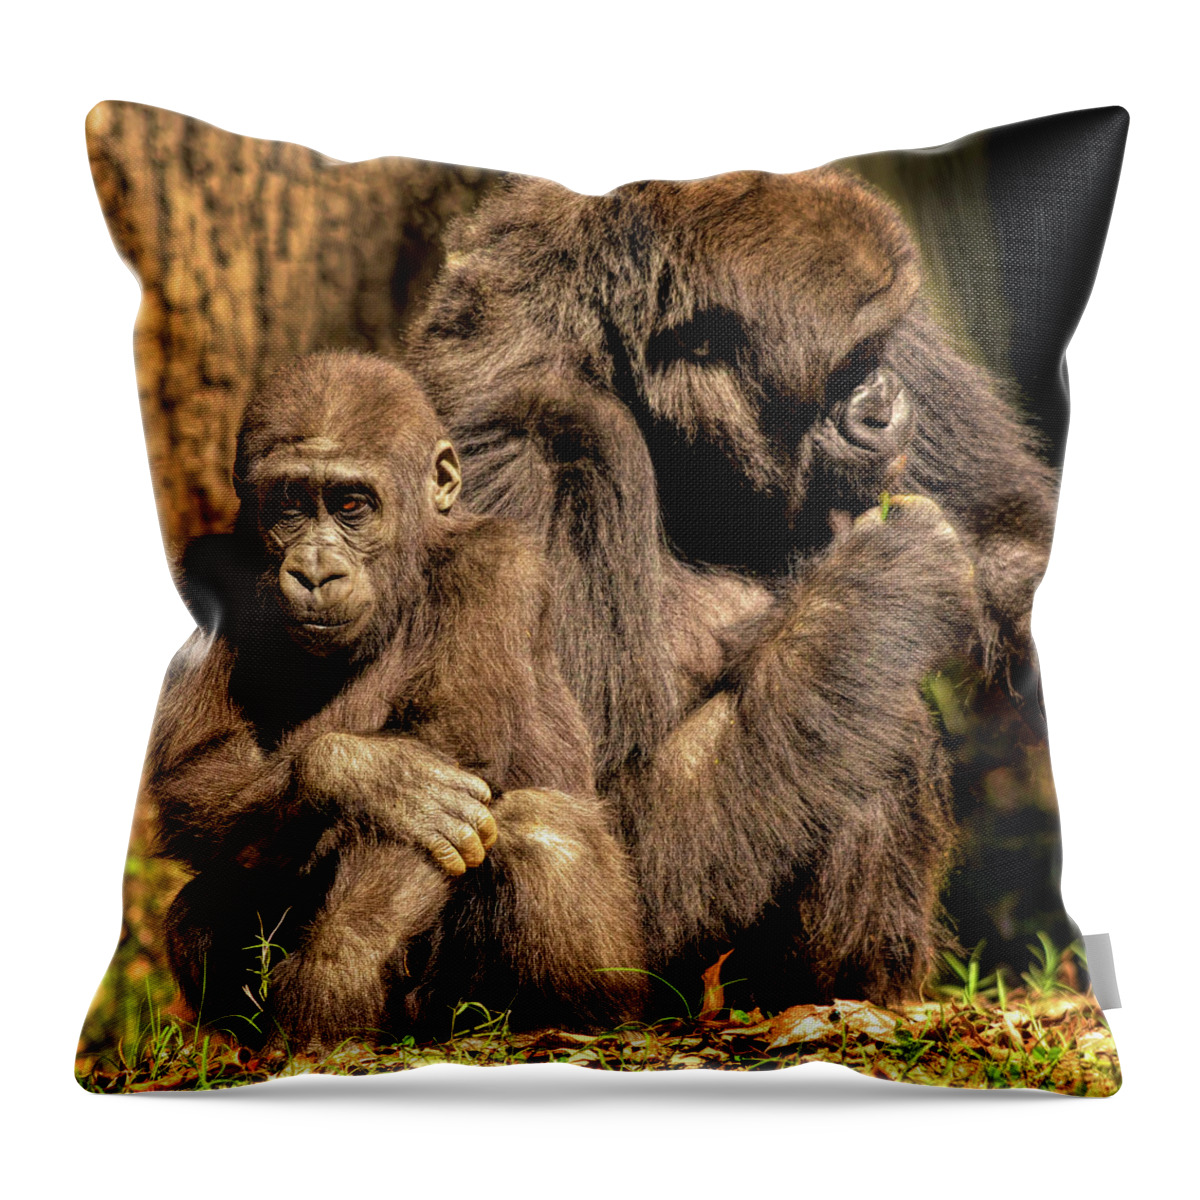 Gorilla Throw Pillow featuring the photograph Gorilla Family by Karen Cox